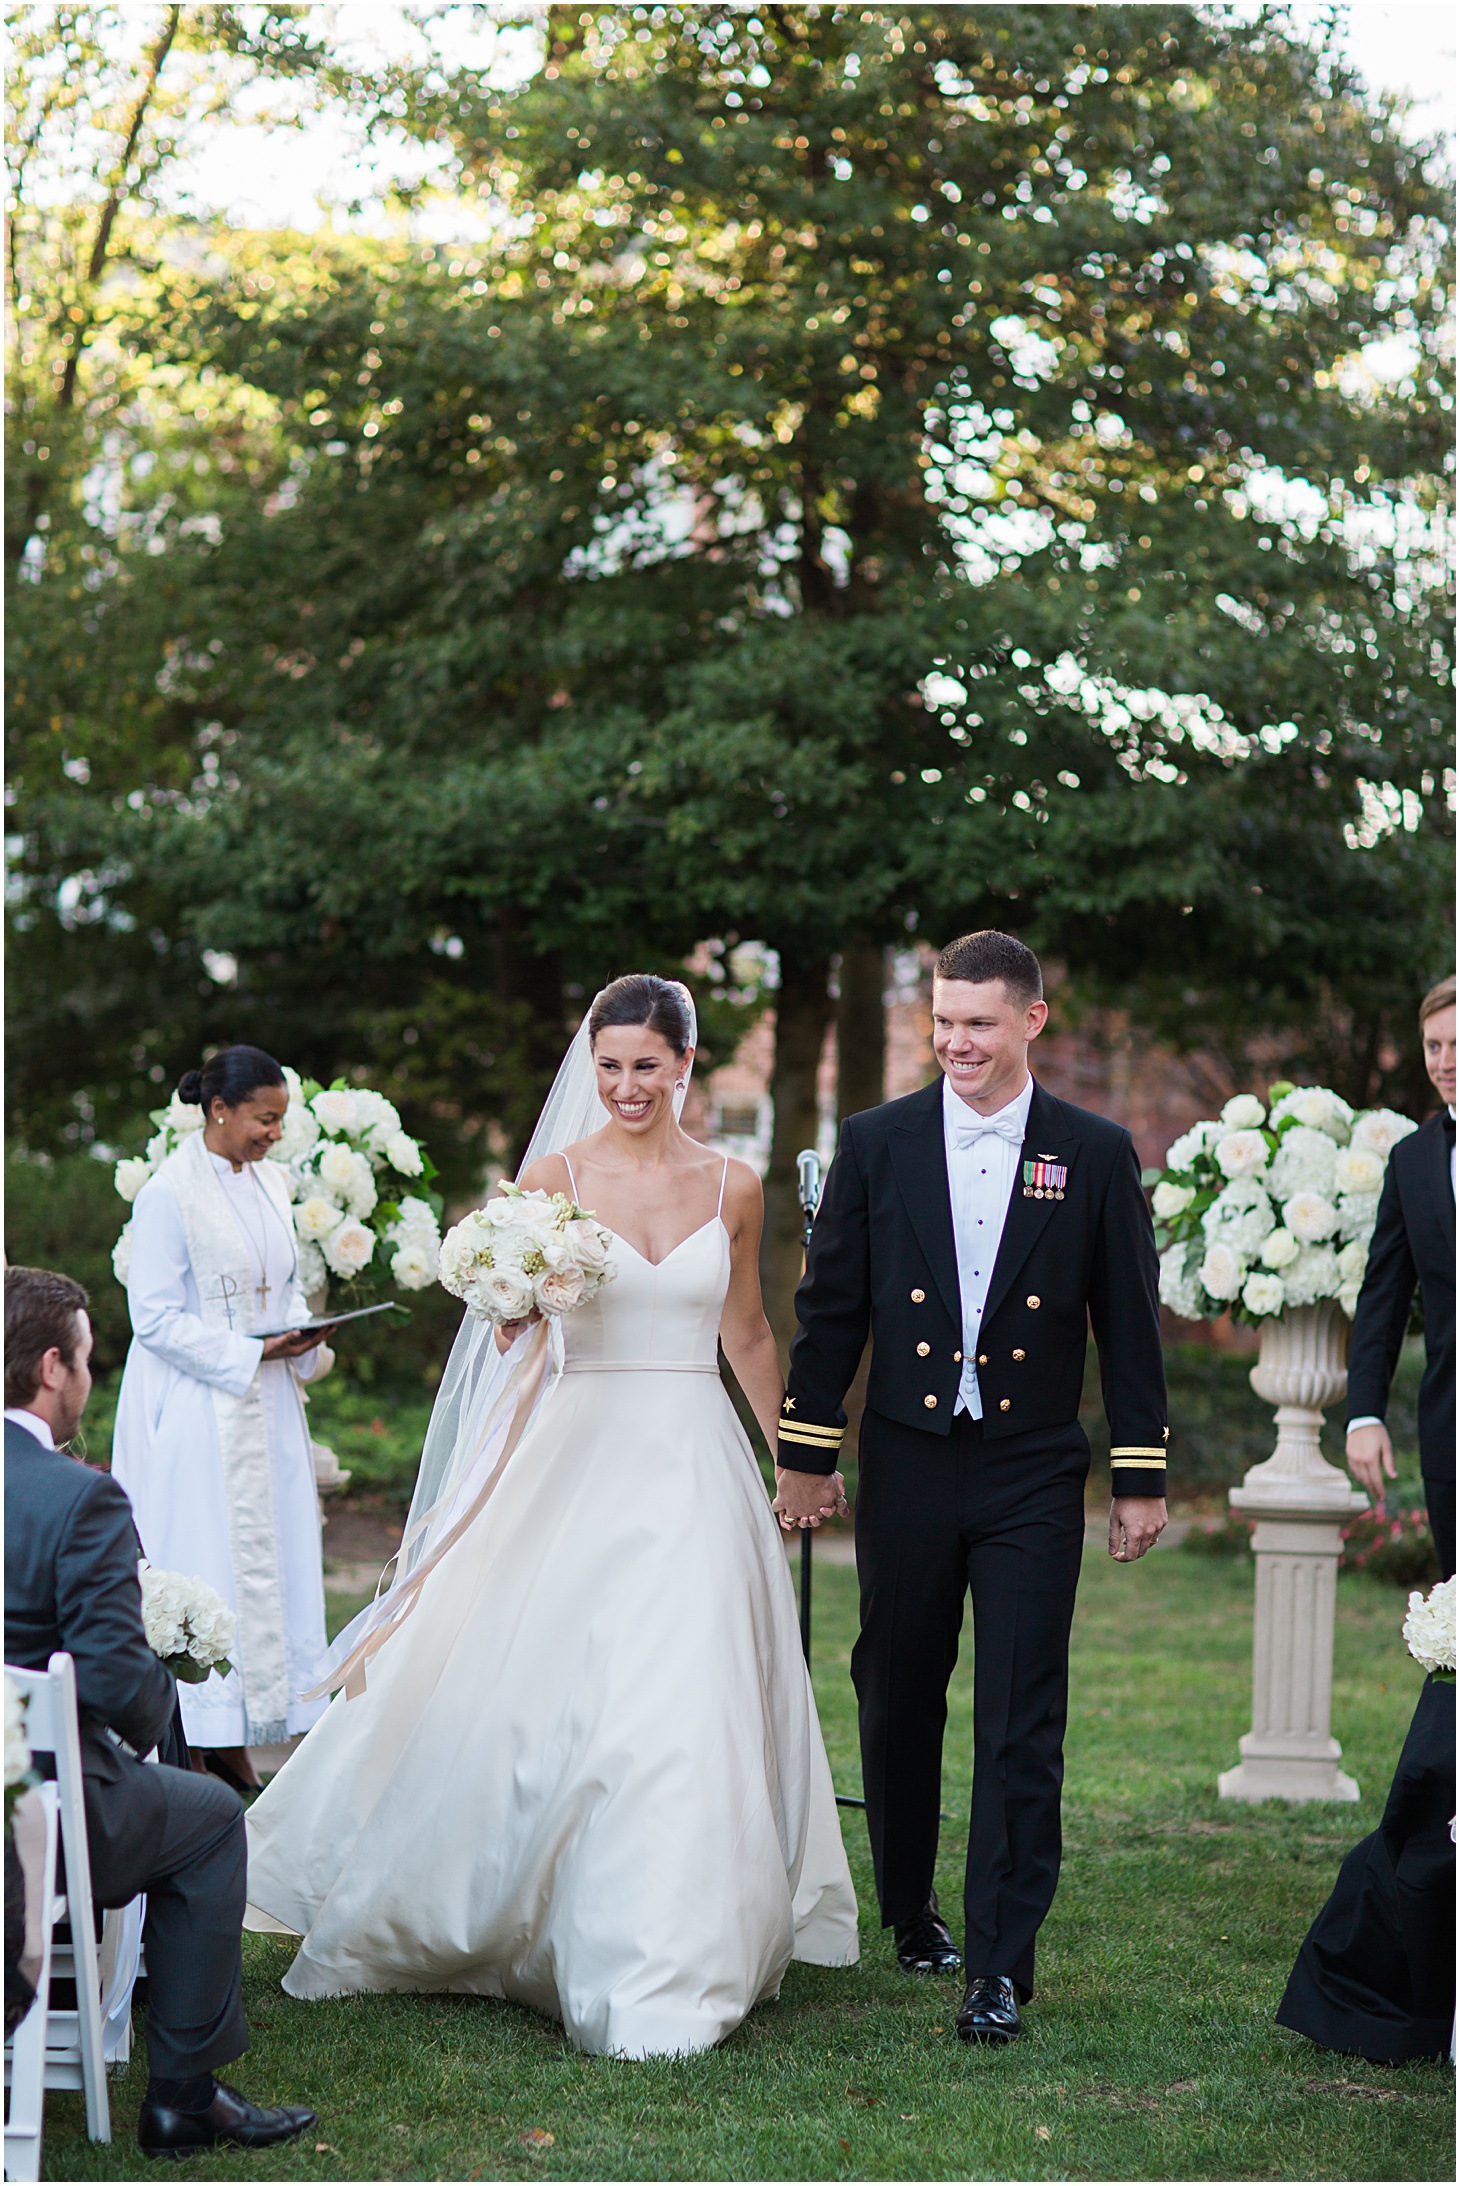 Military Wedding, Amsale bride - A Thoroughly Washingtonian Wedding at Meridian House in DC by Sarah Bradshaw 